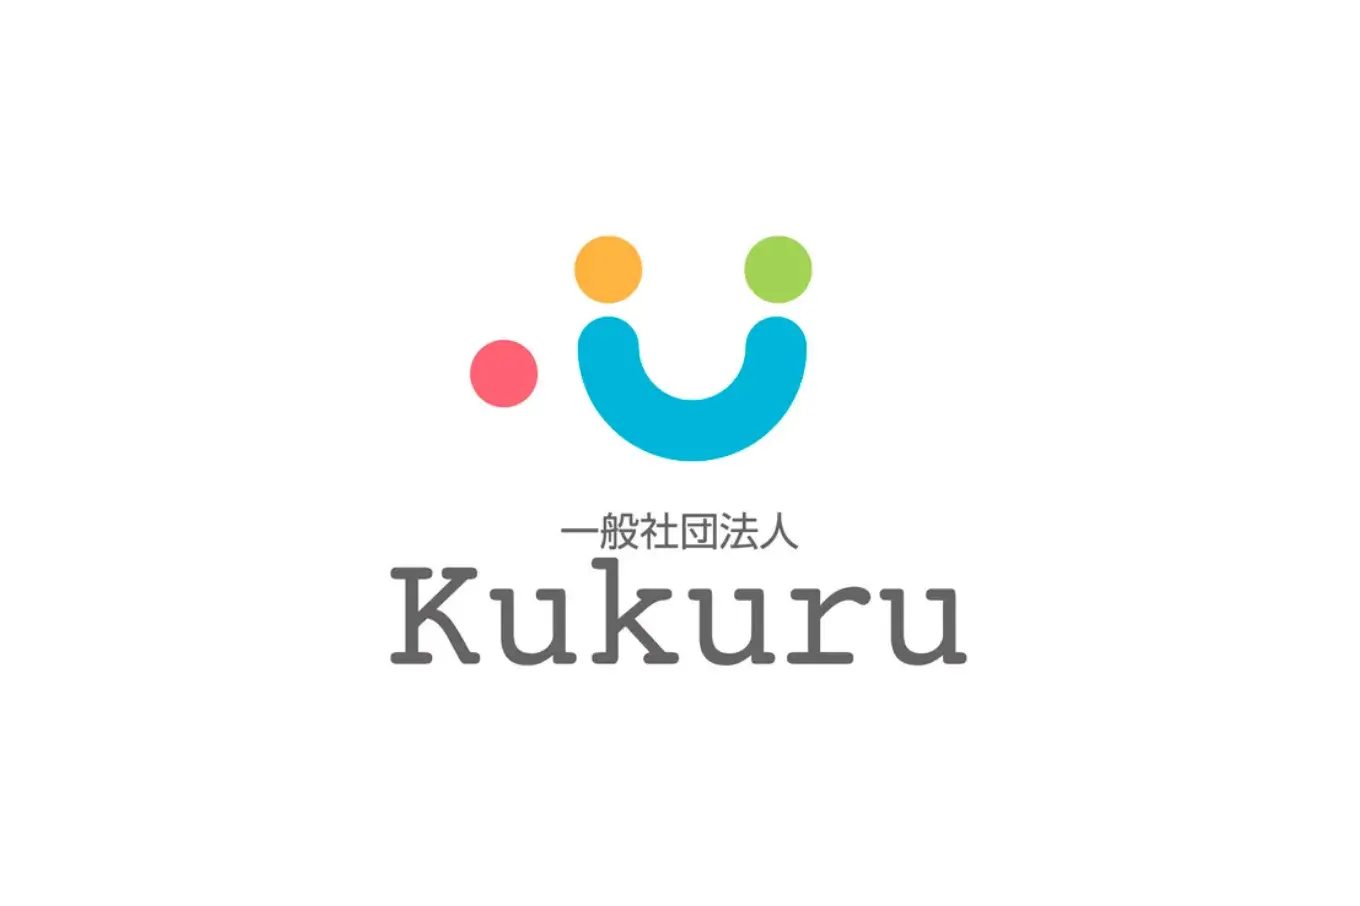 General Incorporated Association Kukuru